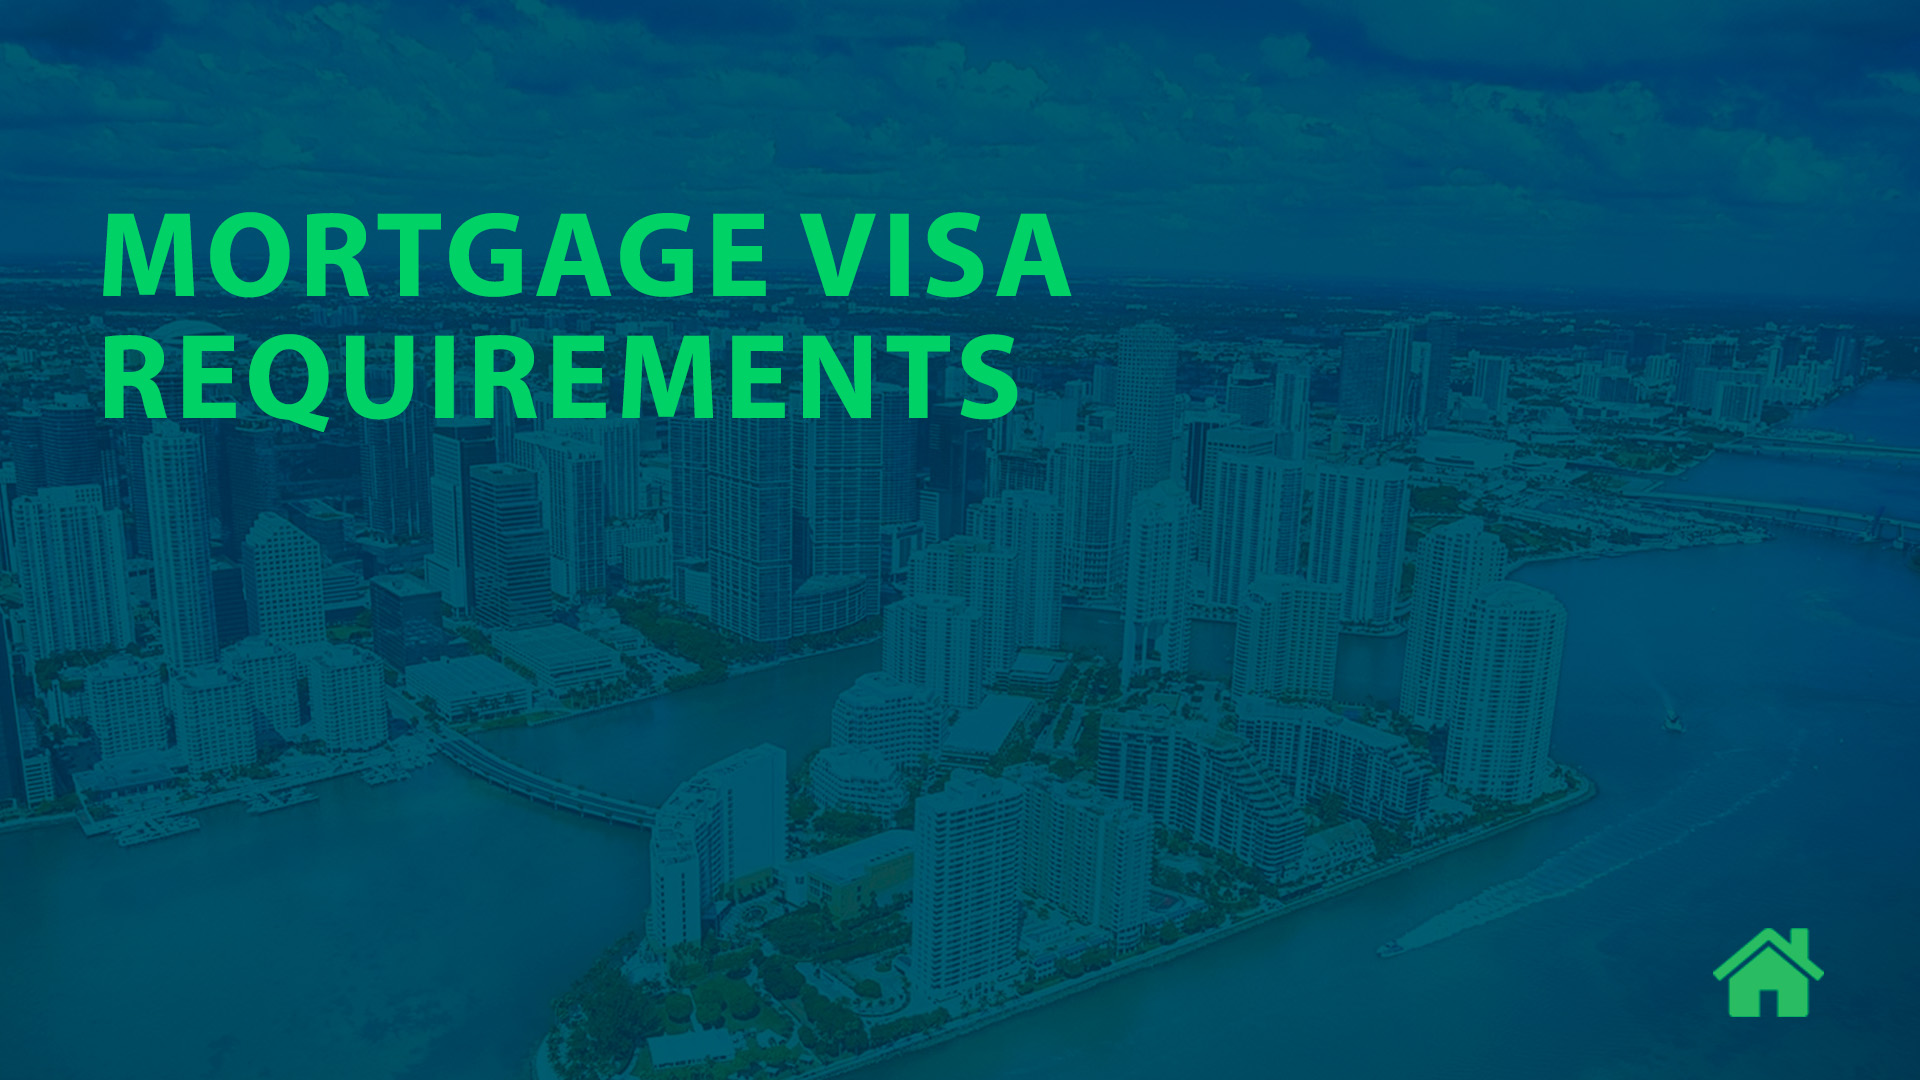 Mortgage visa requirements